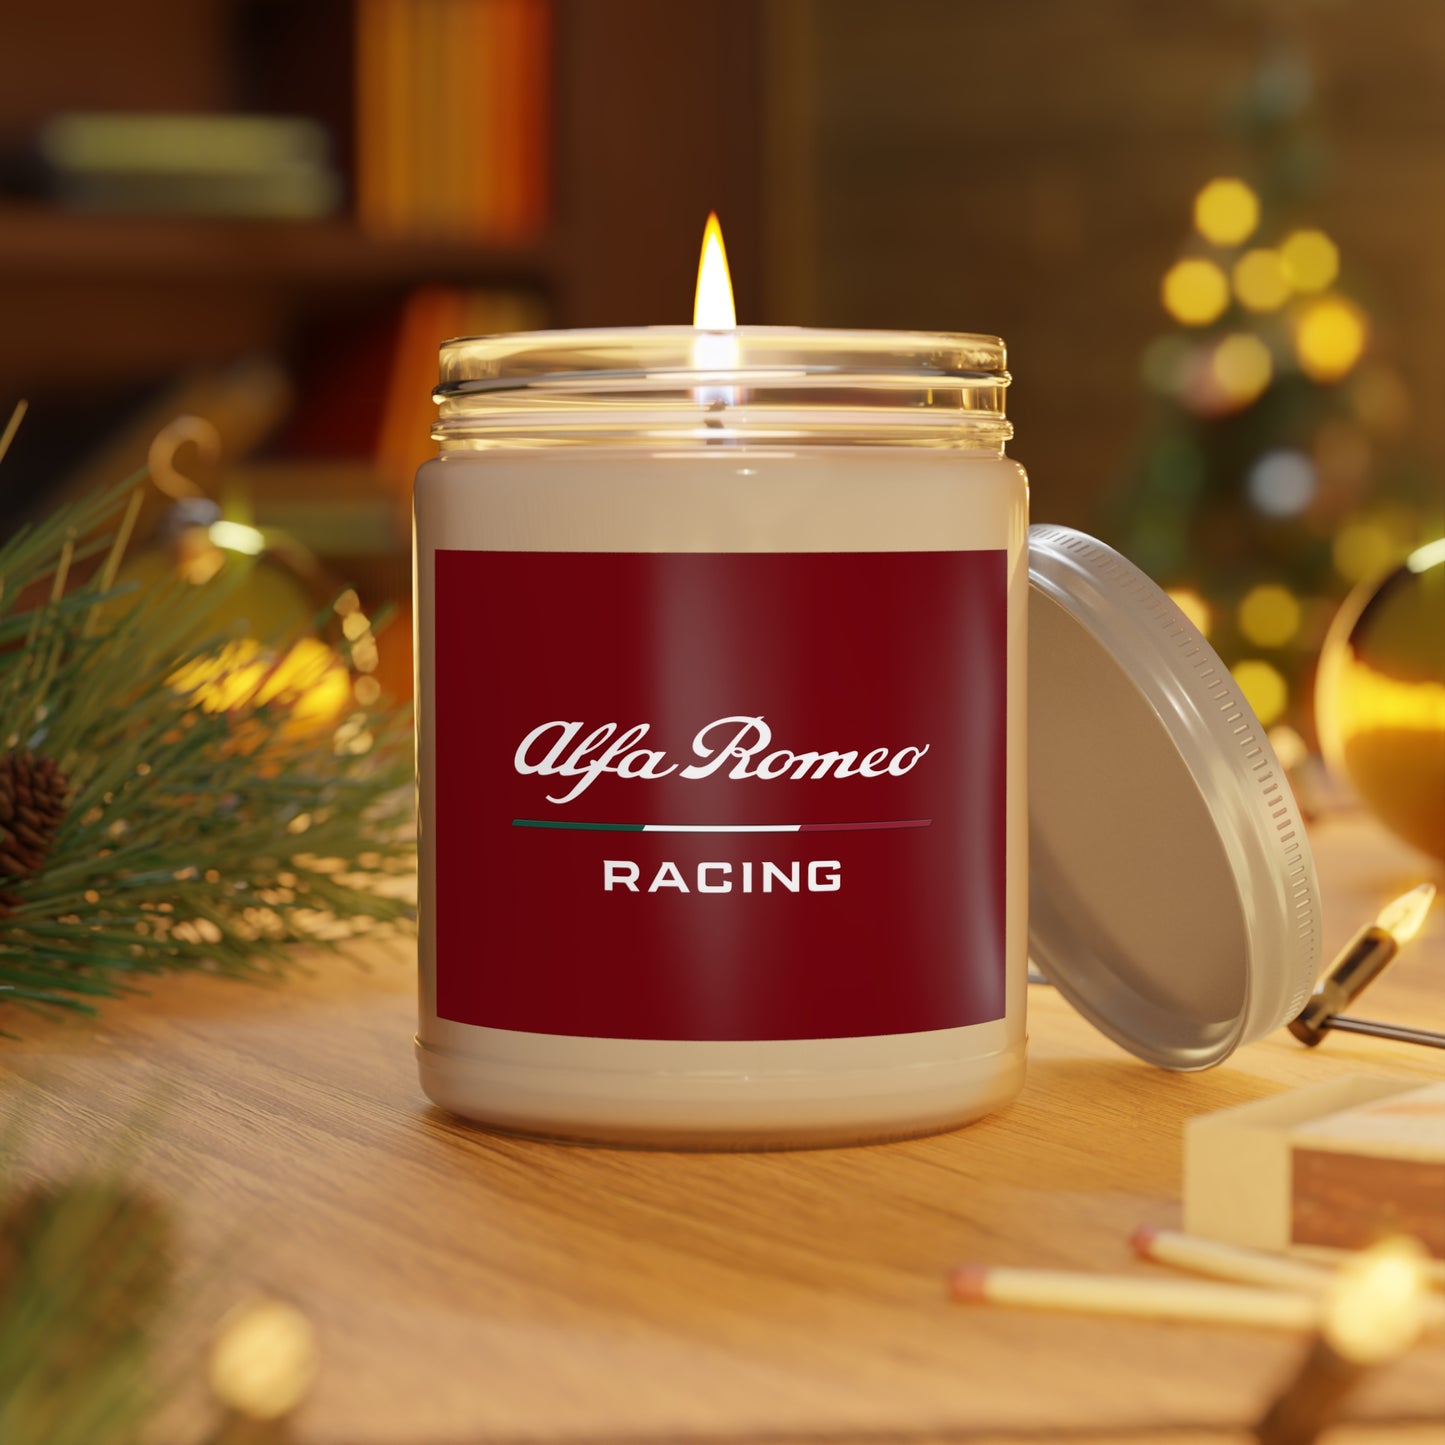 Alfa Romeo Racing Candle - 9oz Soy Wax - Premium Fragrances - Long Burn Time - Relaxation Gift - Luxury Auto Decor